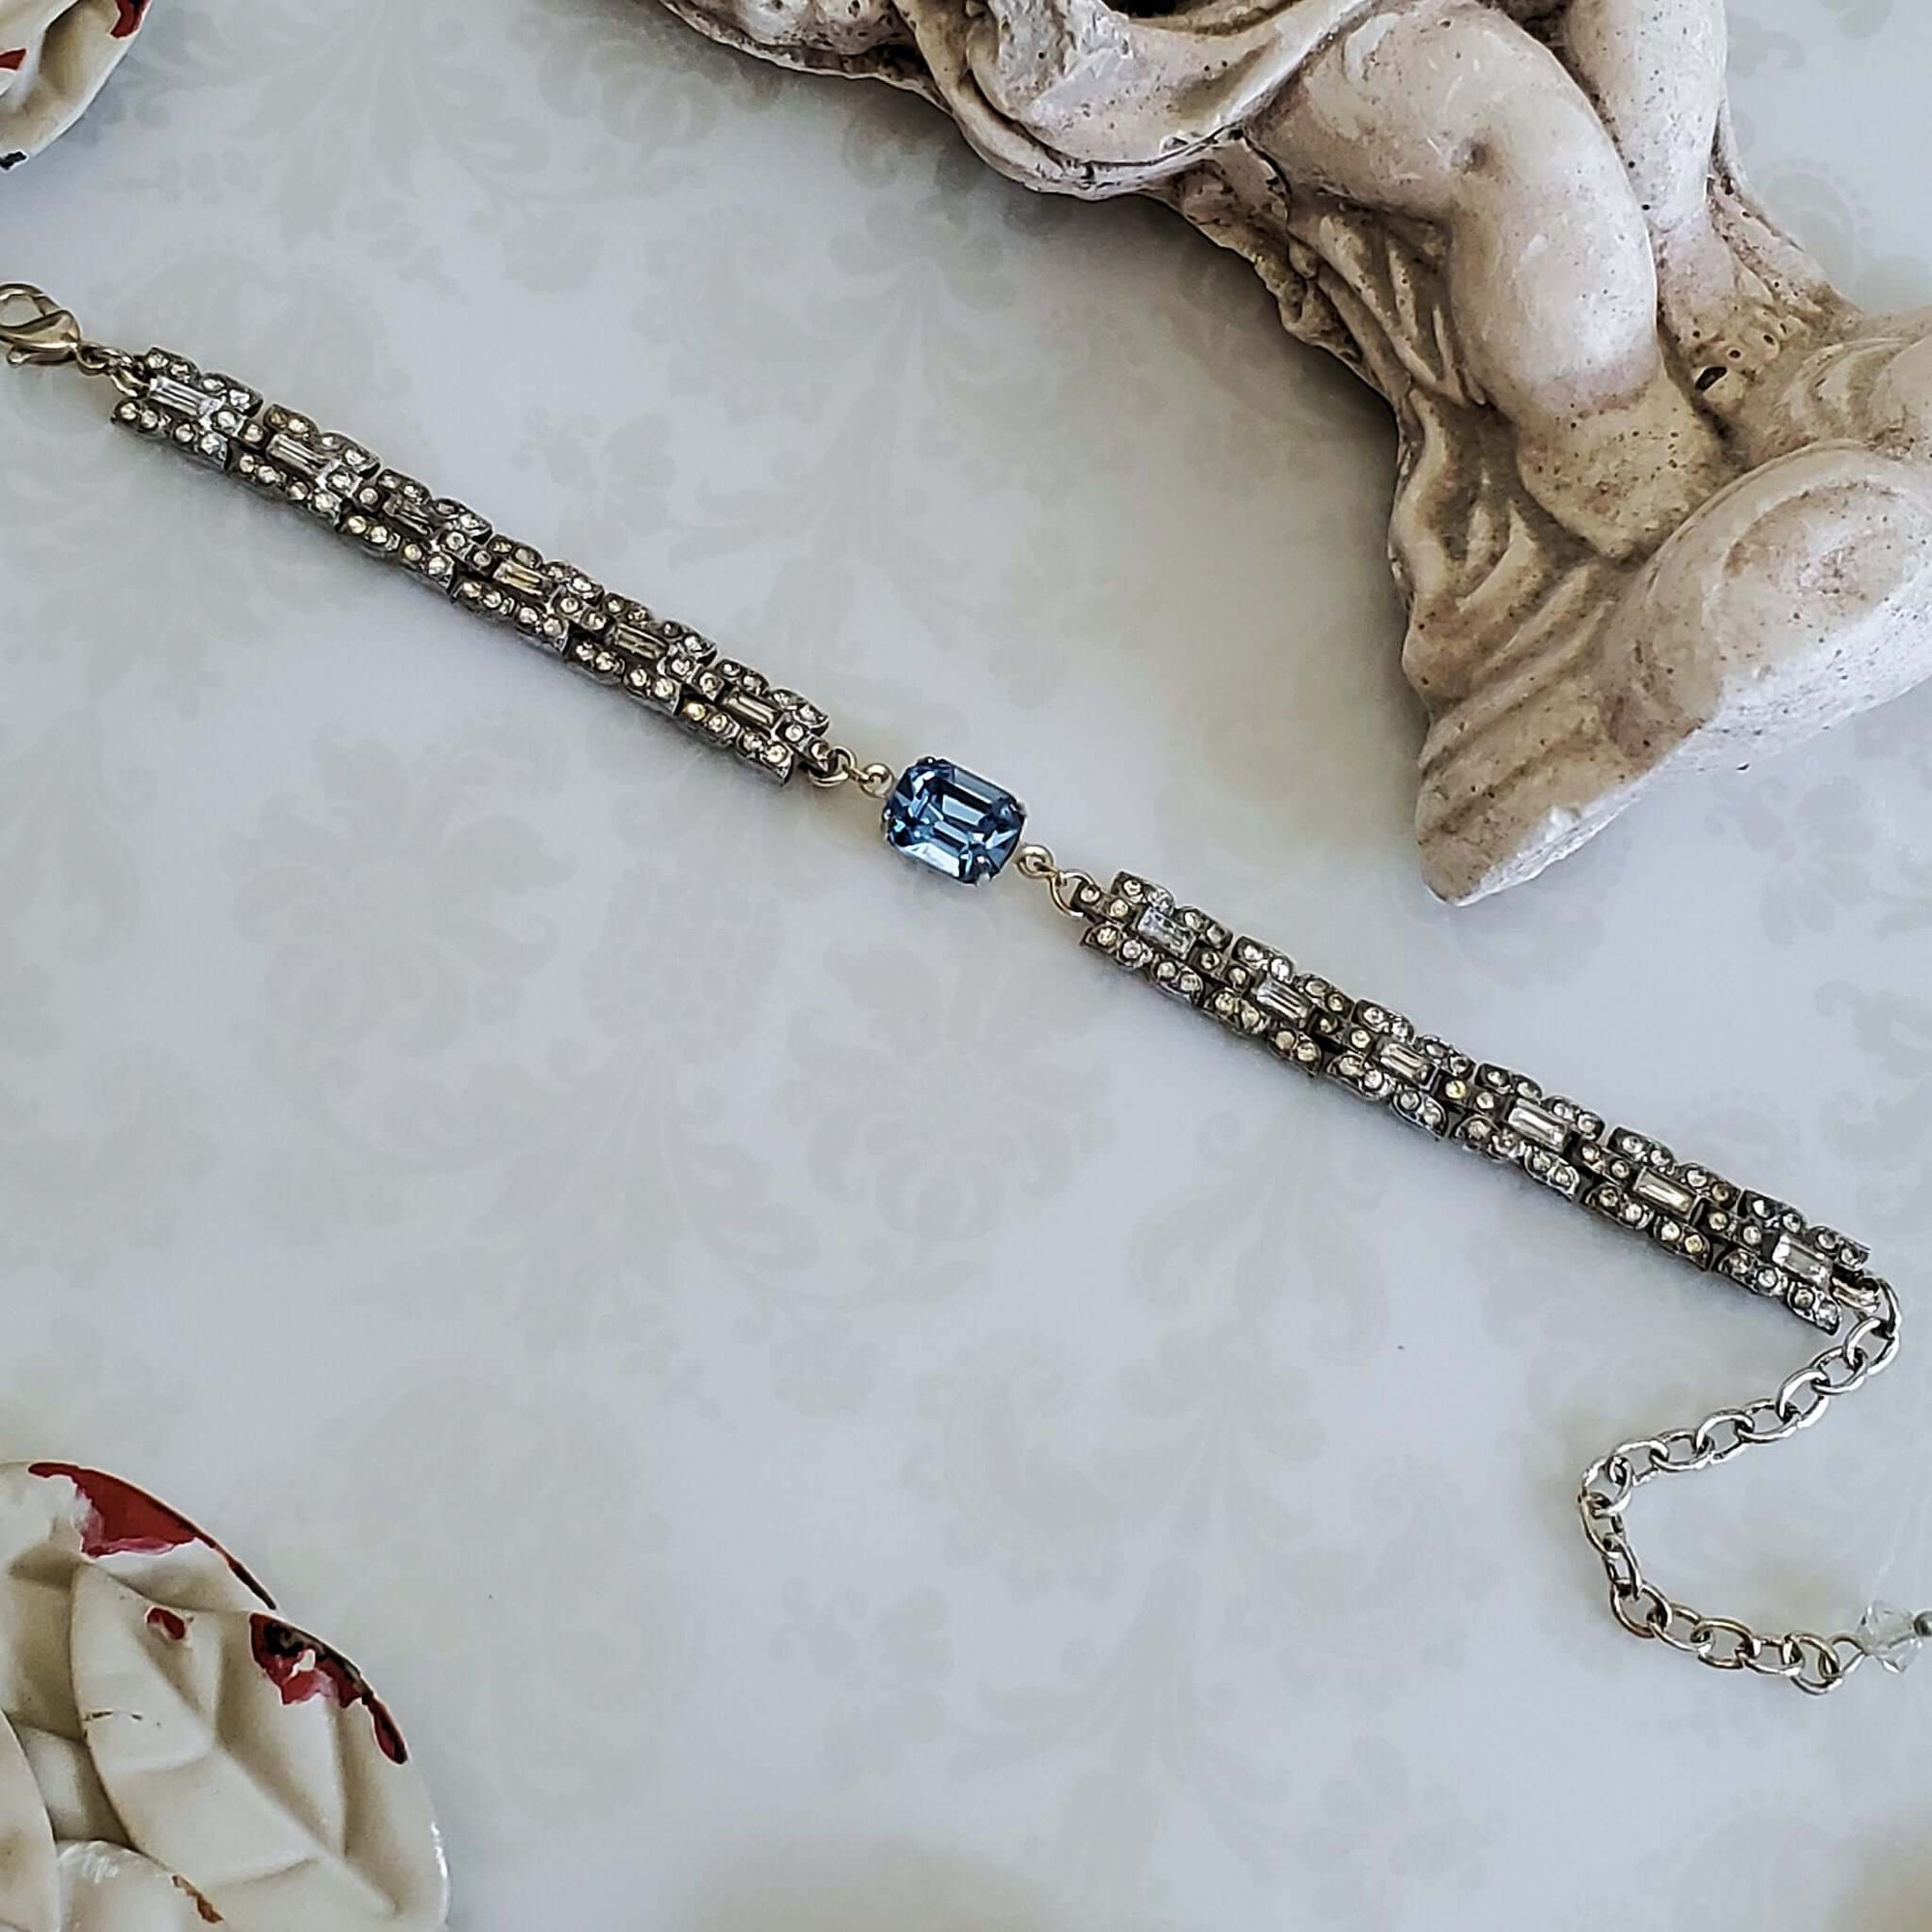 Vintage Rhinestone Link Bracelet with Light Sapphire Stone Accent